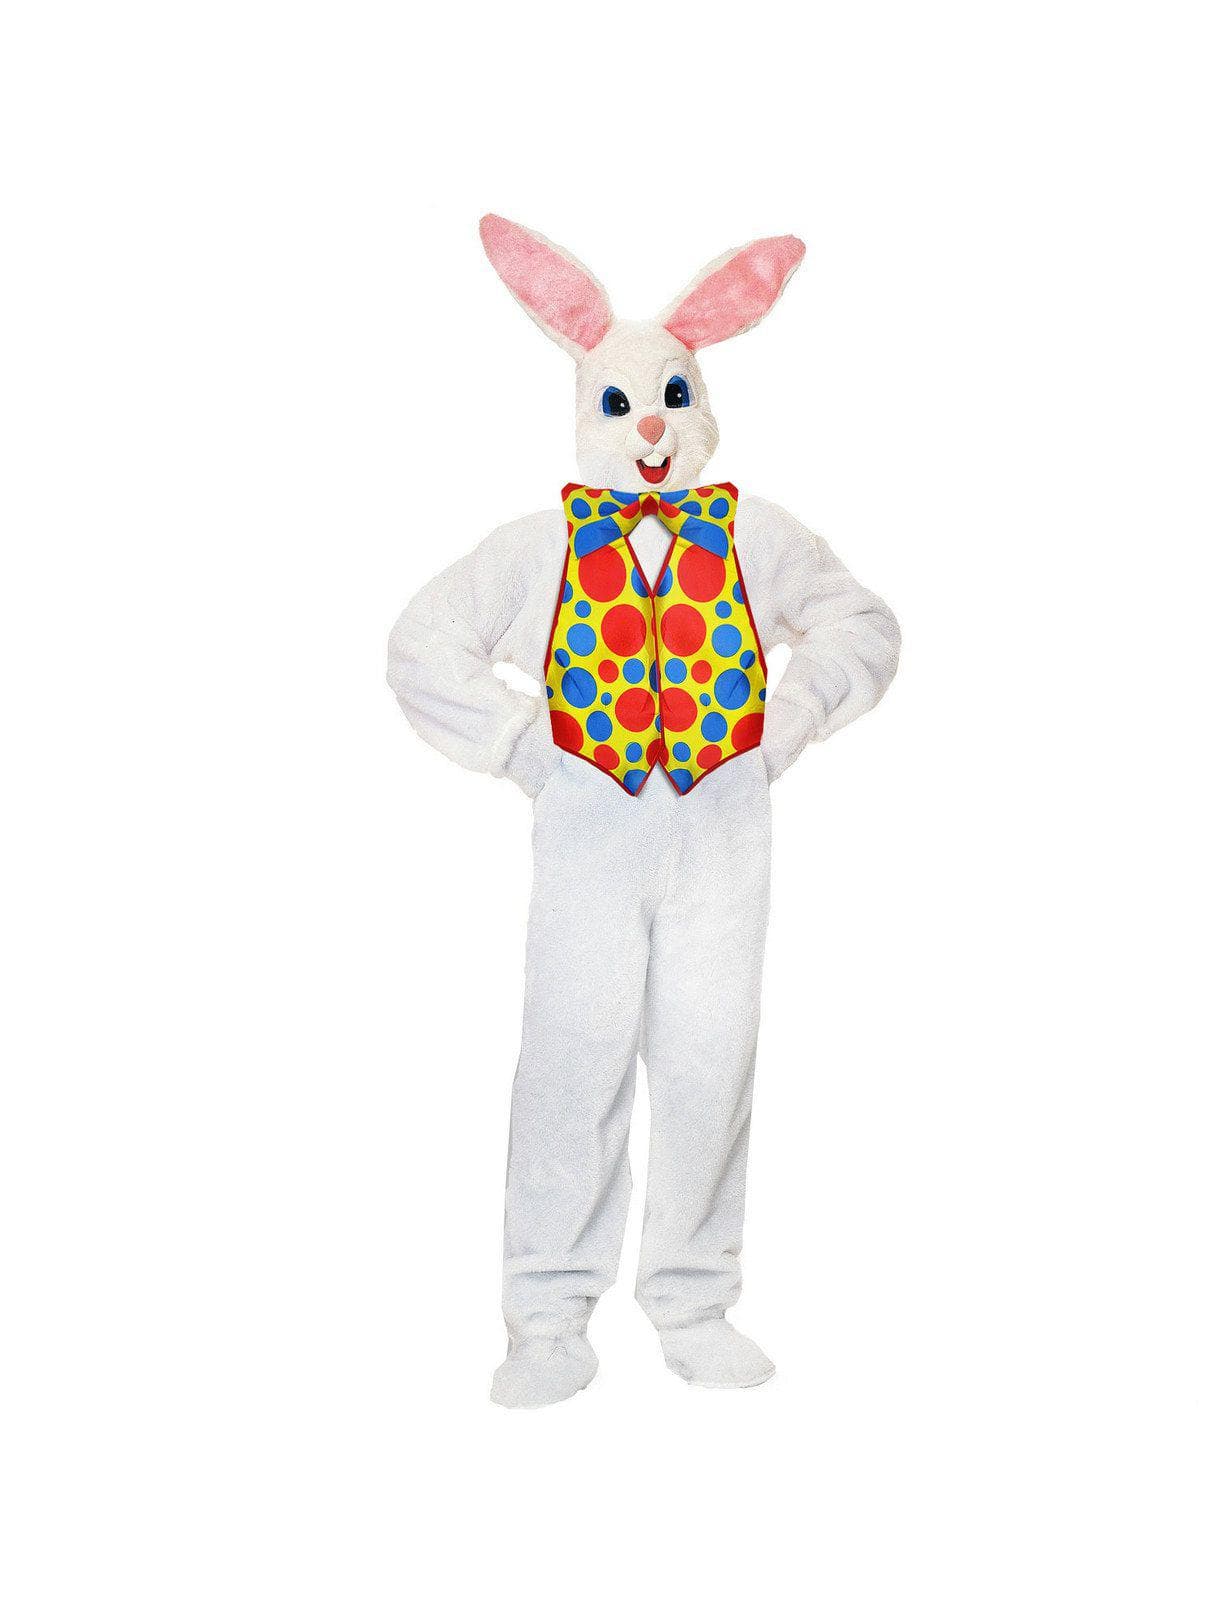 Adult Deluxe Bunny Mascot Costume - costumes.com